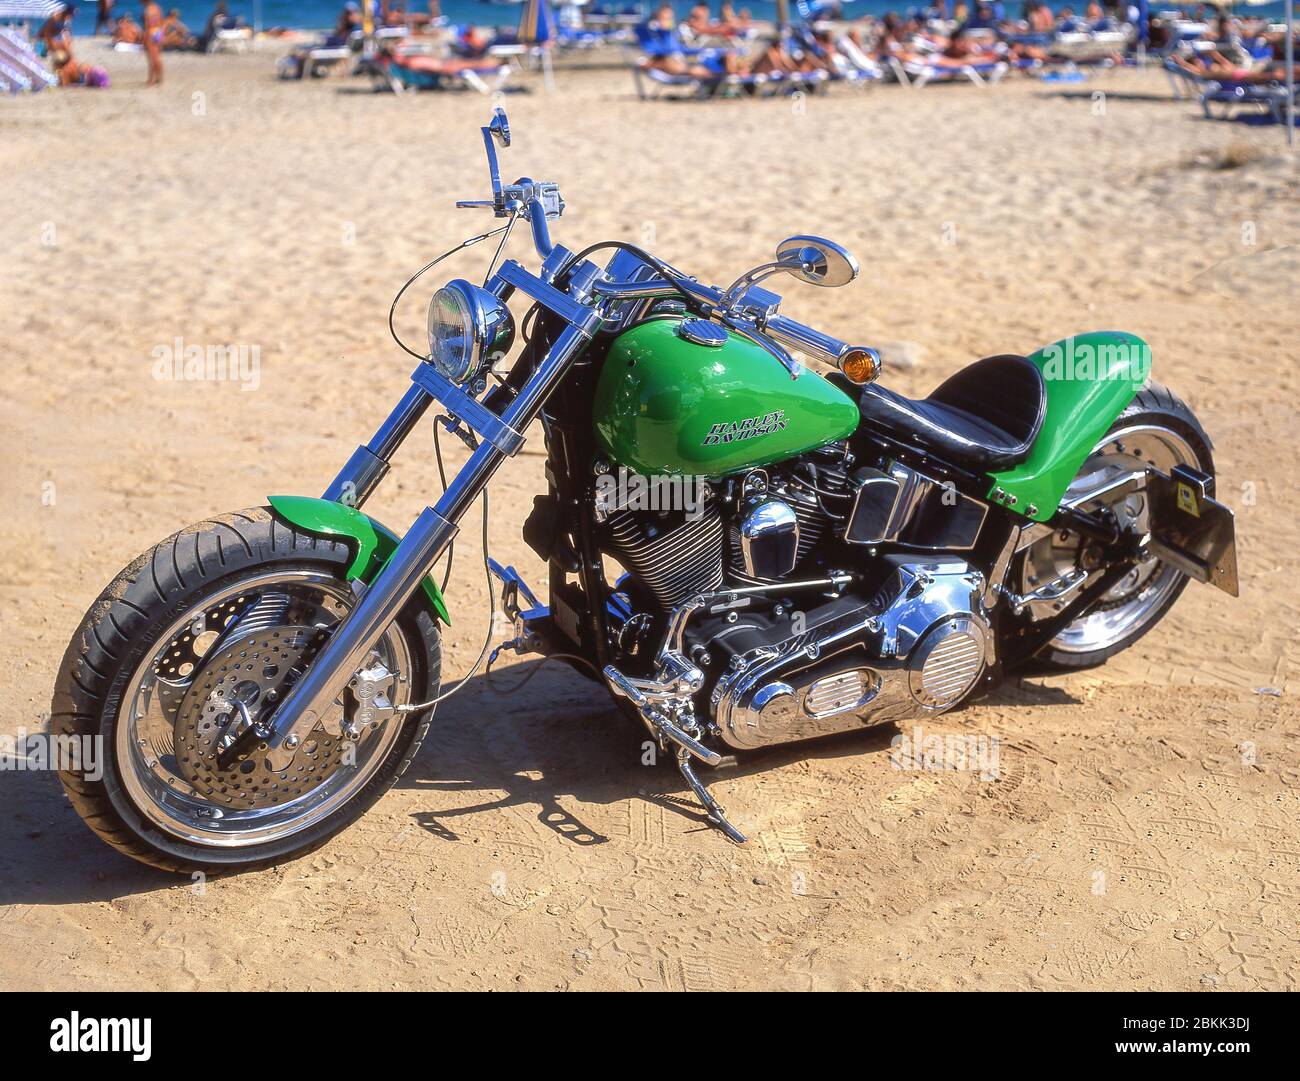 Moto Harley-Davidson sur la plage, Playa Puerto Banus, Puerto Banus, Costa del sol, Malaga Province, Andalousie, Espagne Banque D'Images